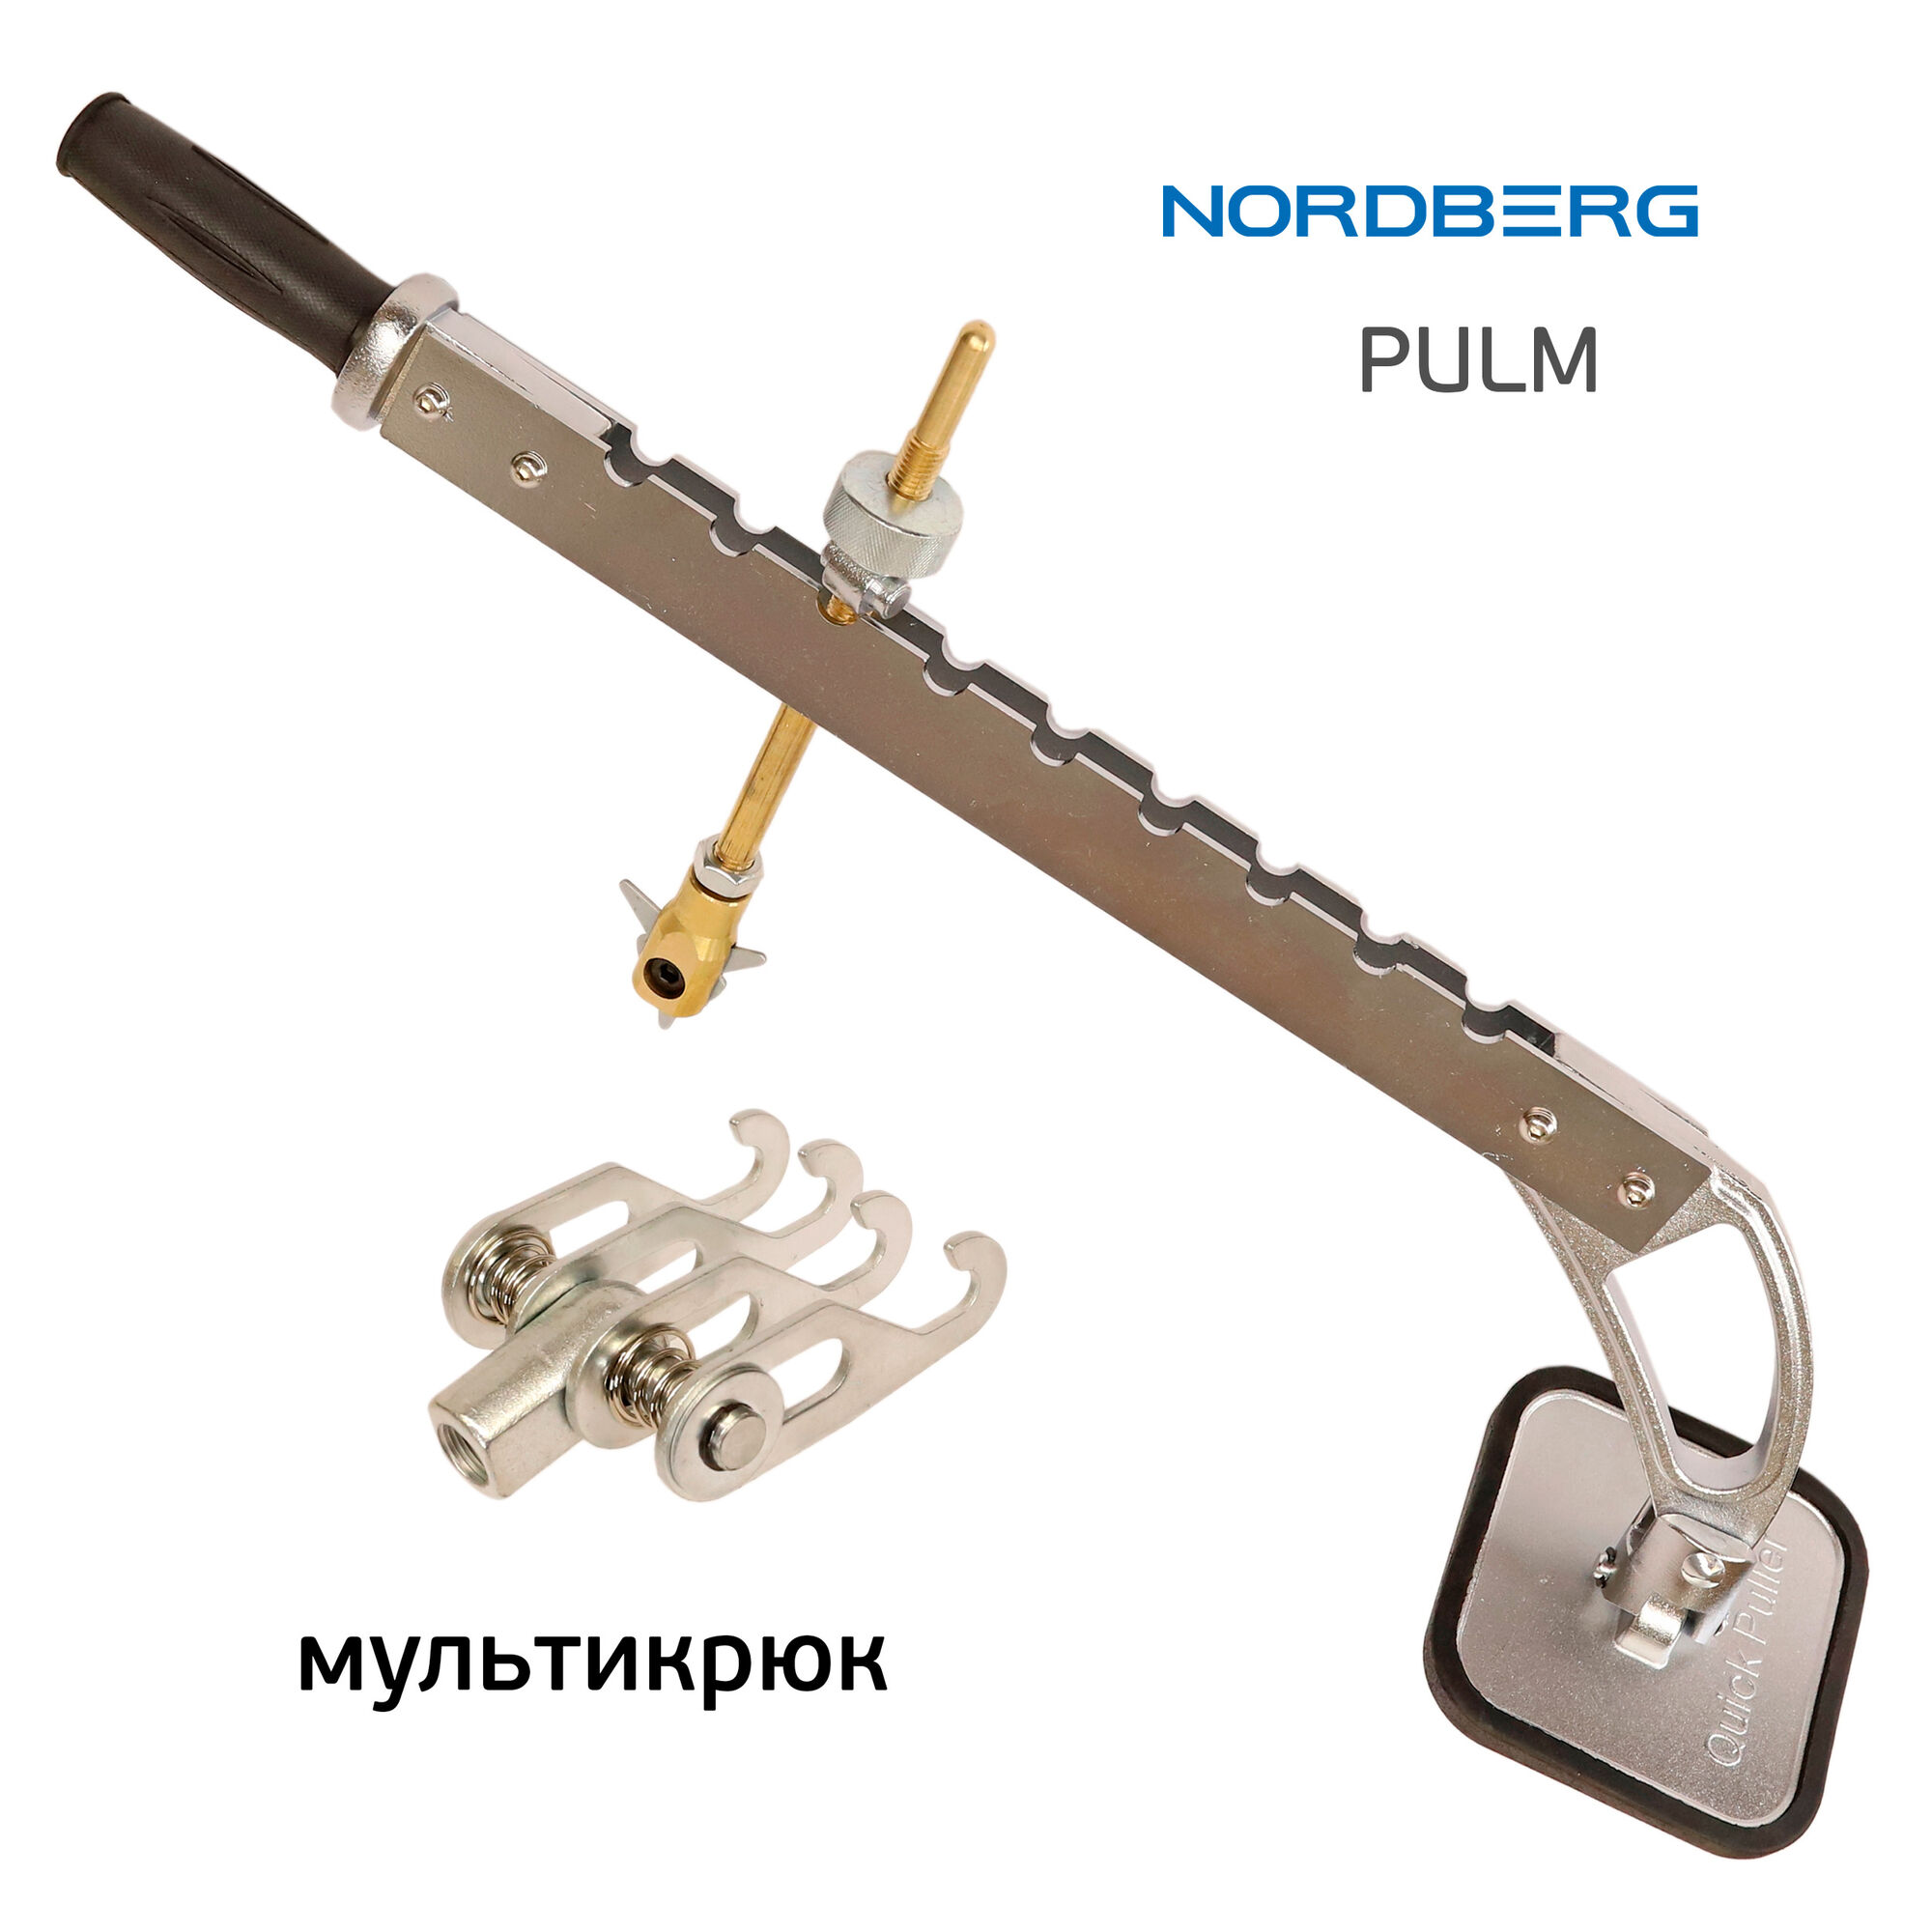 Рычаг для правки Nordberg PULM мультикрюк для вытяжки кузова